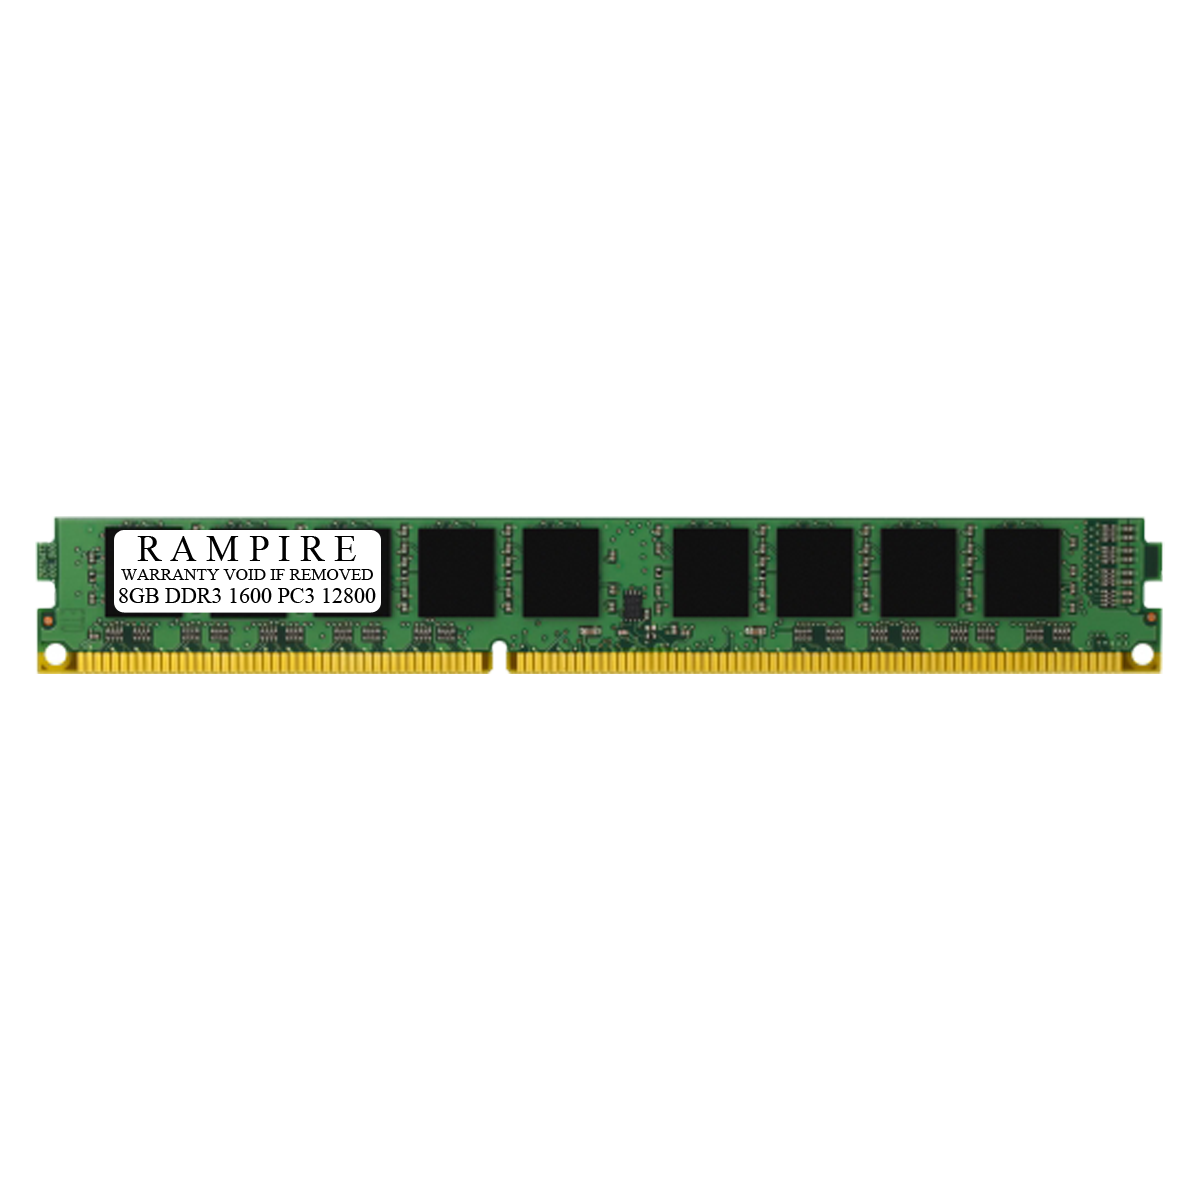 RAMPIRE 8GB DDR3 1600 (PC3 12800) 240-Pin SDRAM 2Rx8 VLP (Low Profile) 1.5V ECC Unregistered Server Memory